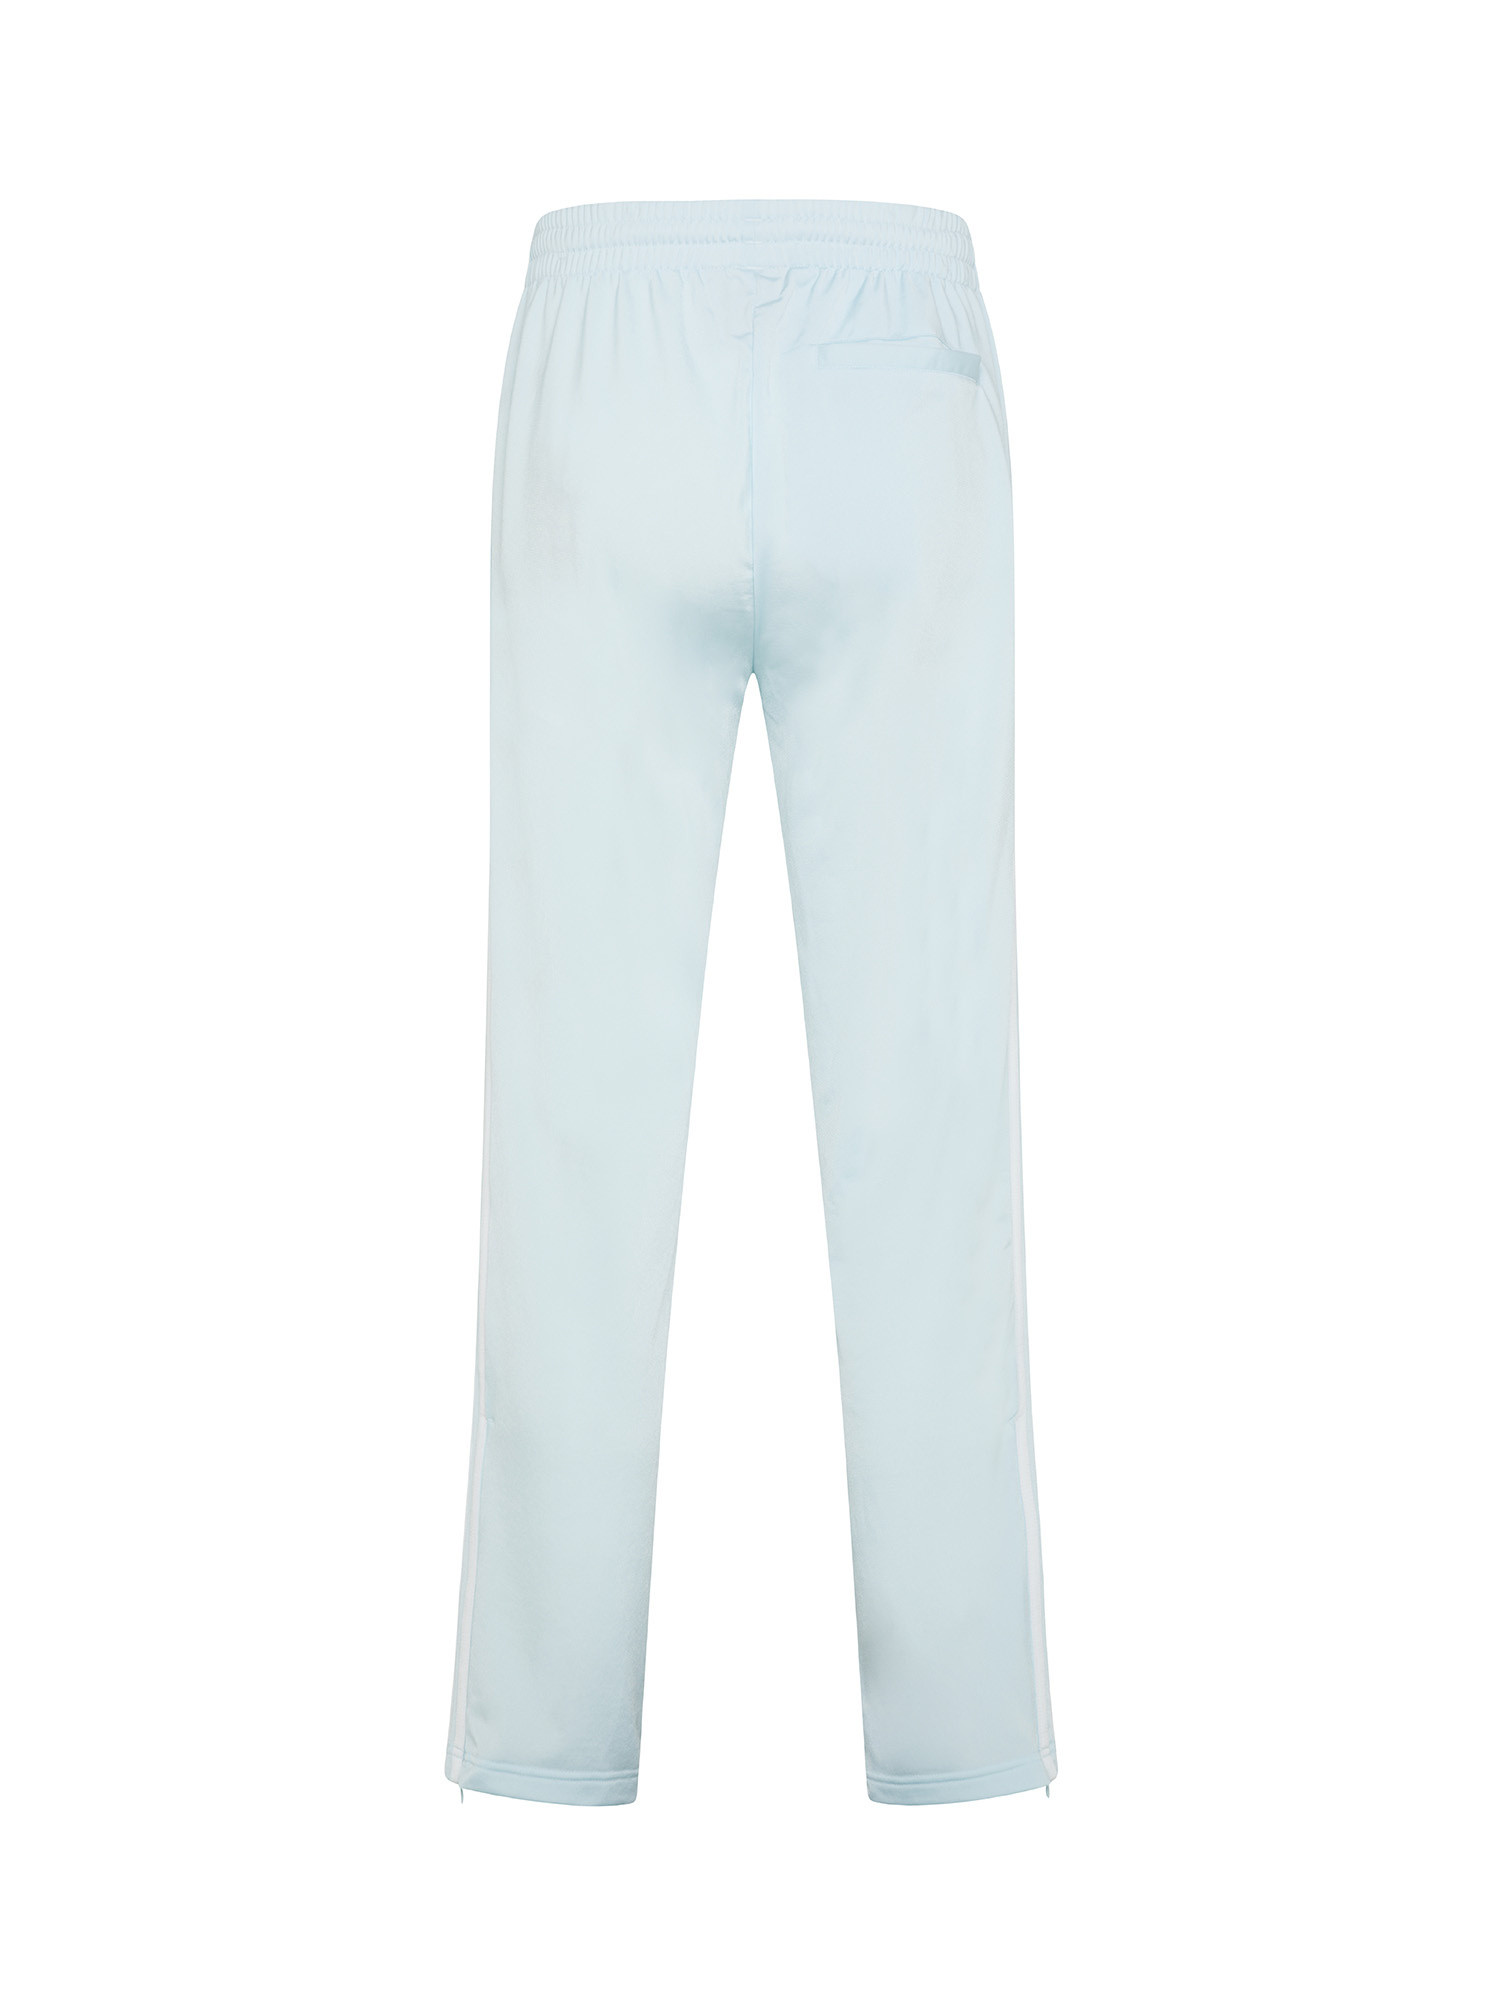 Adidas - Pantalone sportivo adicolor, Azzurro chiaro, large image number 1